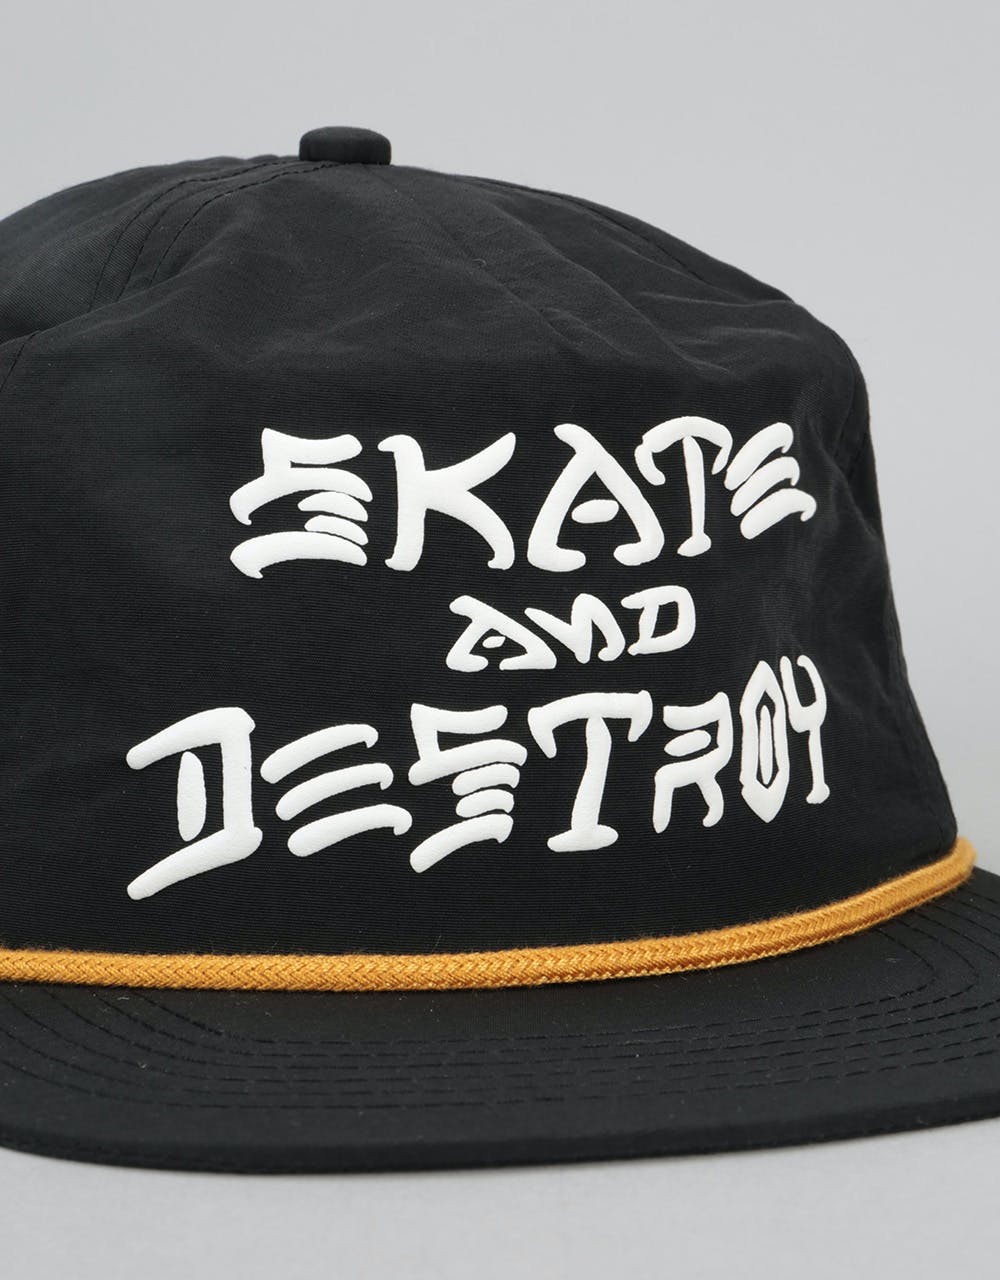 Thrasher Skate and Destroy Puff Ink Snapback Cap - Black